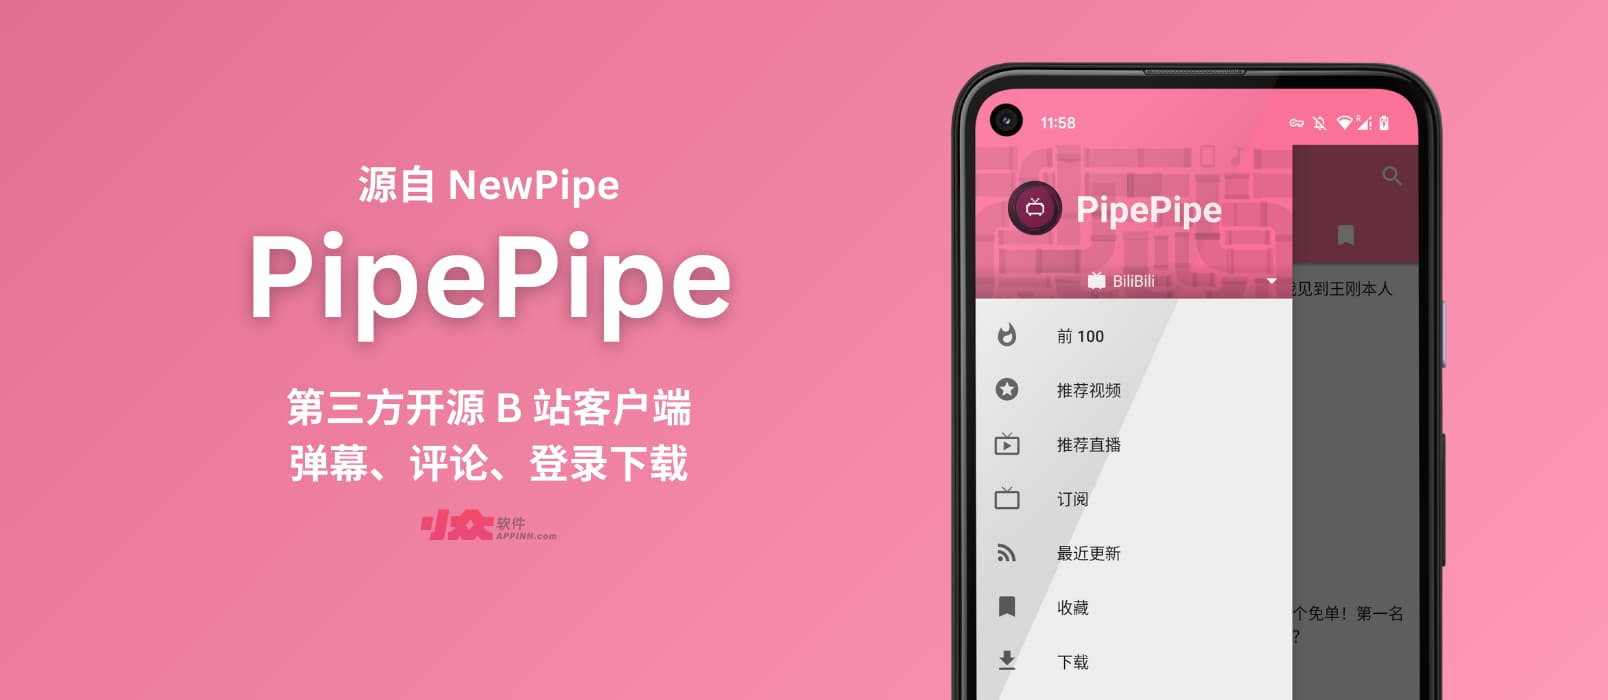 PipePipe - 第三方开源 B 站 Android 客户端，支持弹幕、评论、登录下载｜原自 NewPipe 1